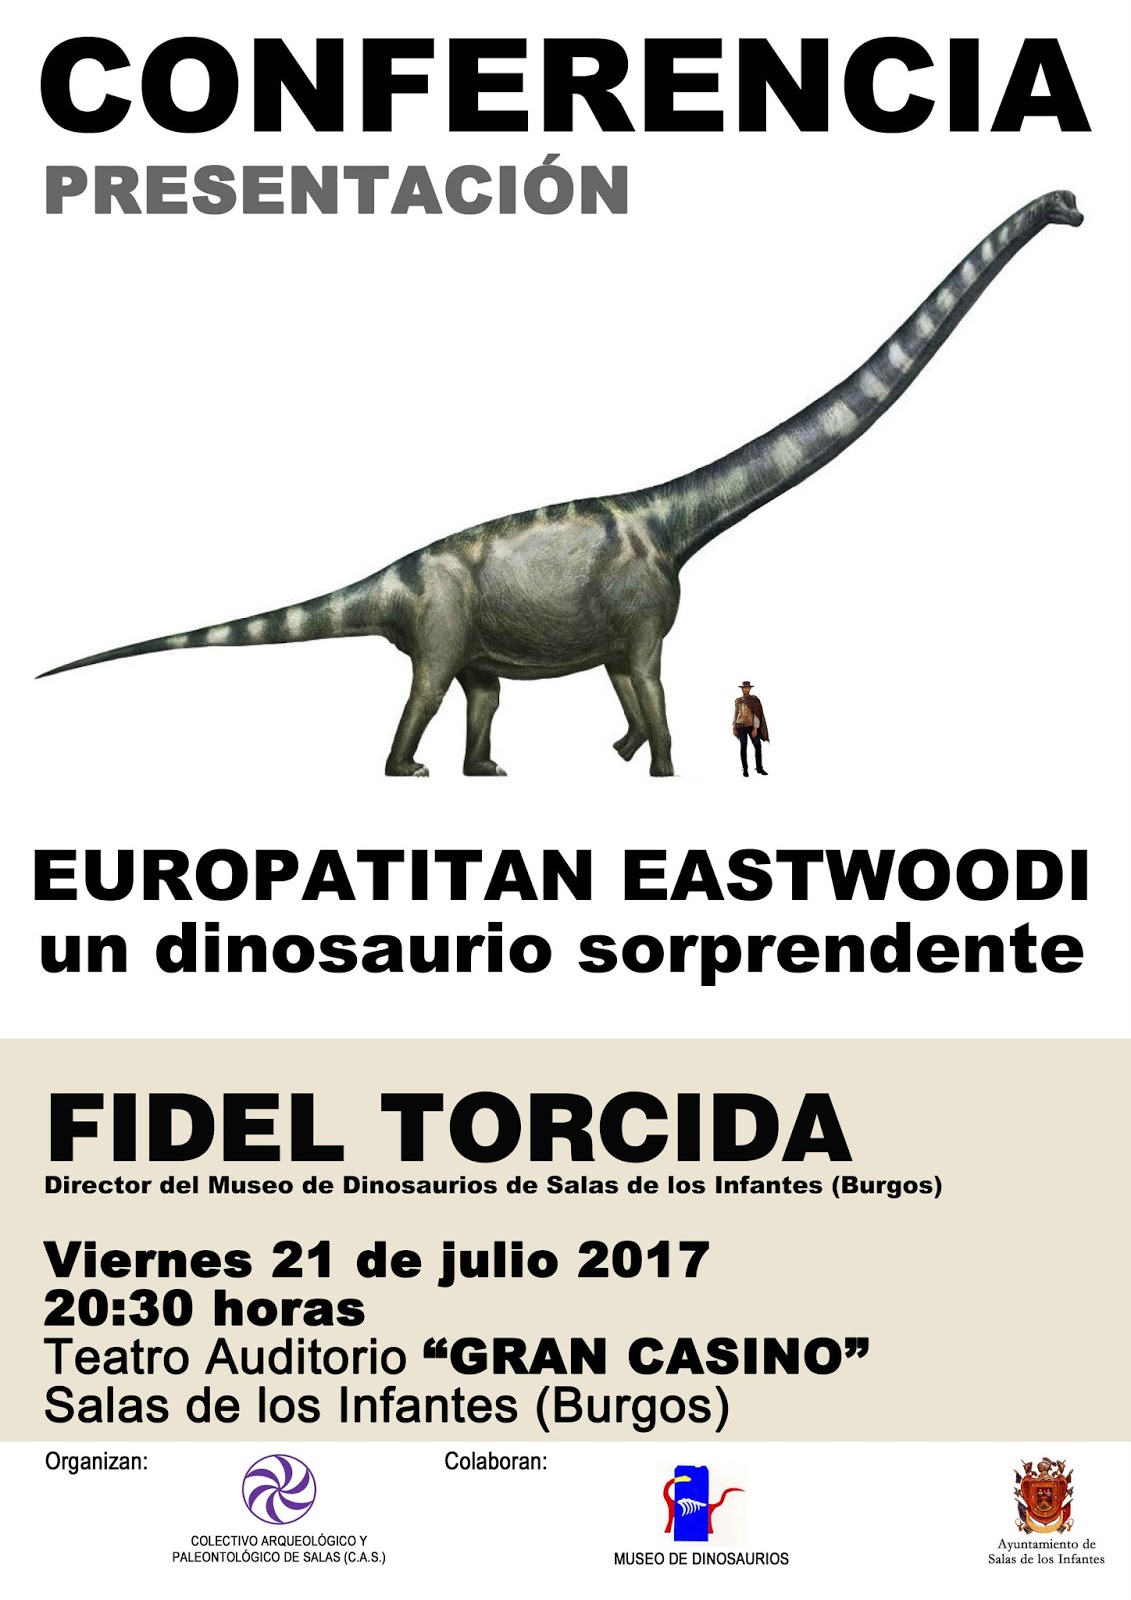 Fundacion Dinosaurios Cyl: CONFERENCIA: Presentación de Europatitan  eastwoodi a cargo de Fidel Torcida